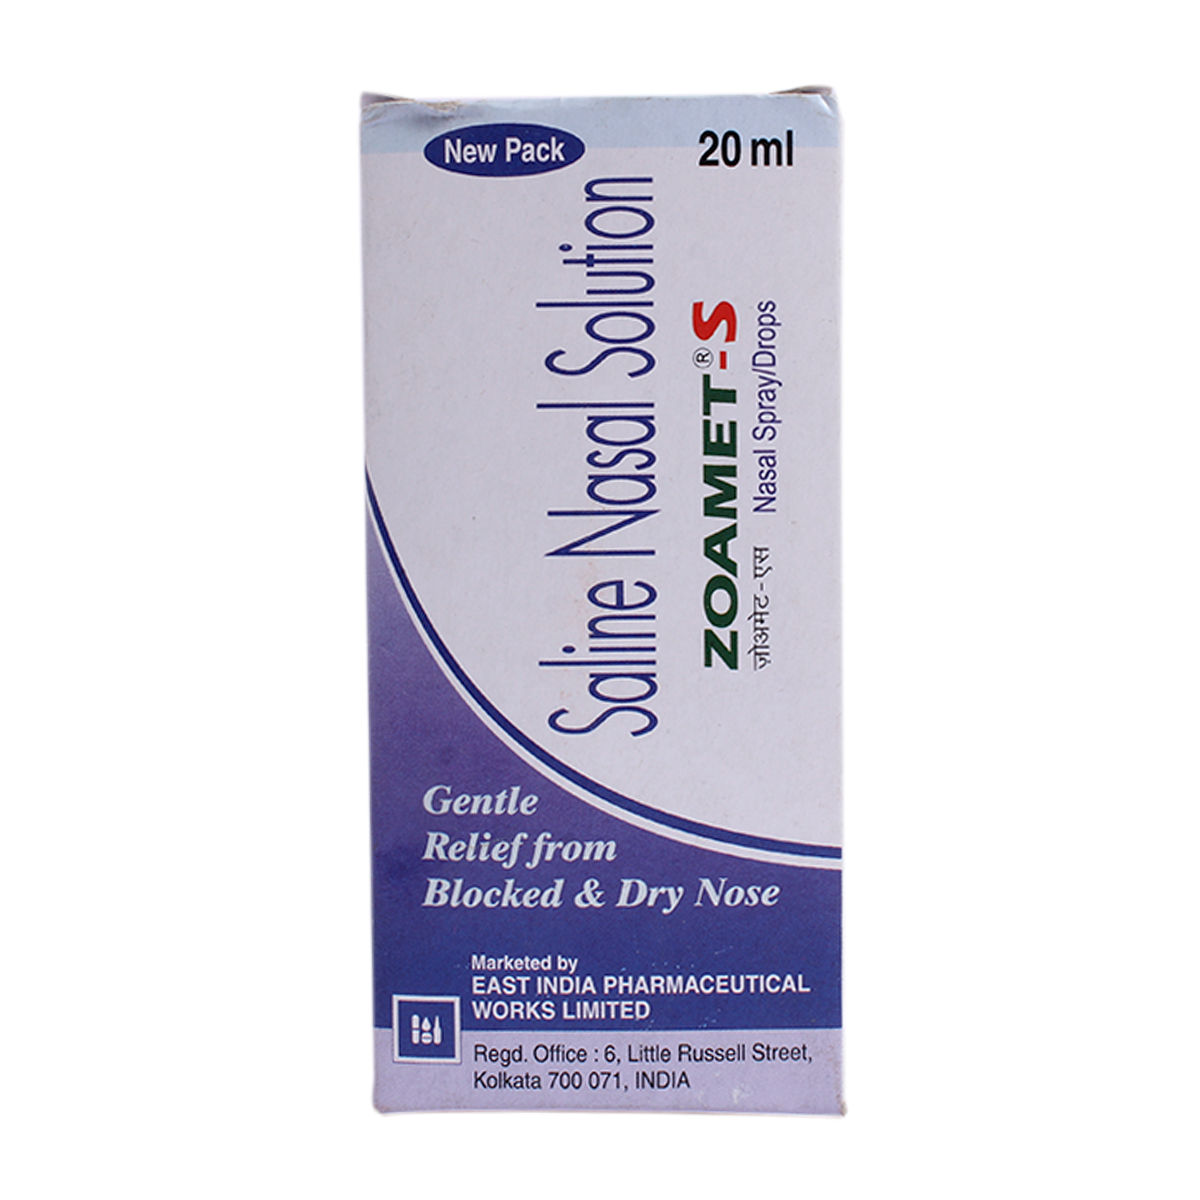 Zoamet-S Nasal Spray/Drops 20 ml Price, Uses, Side Effects ...